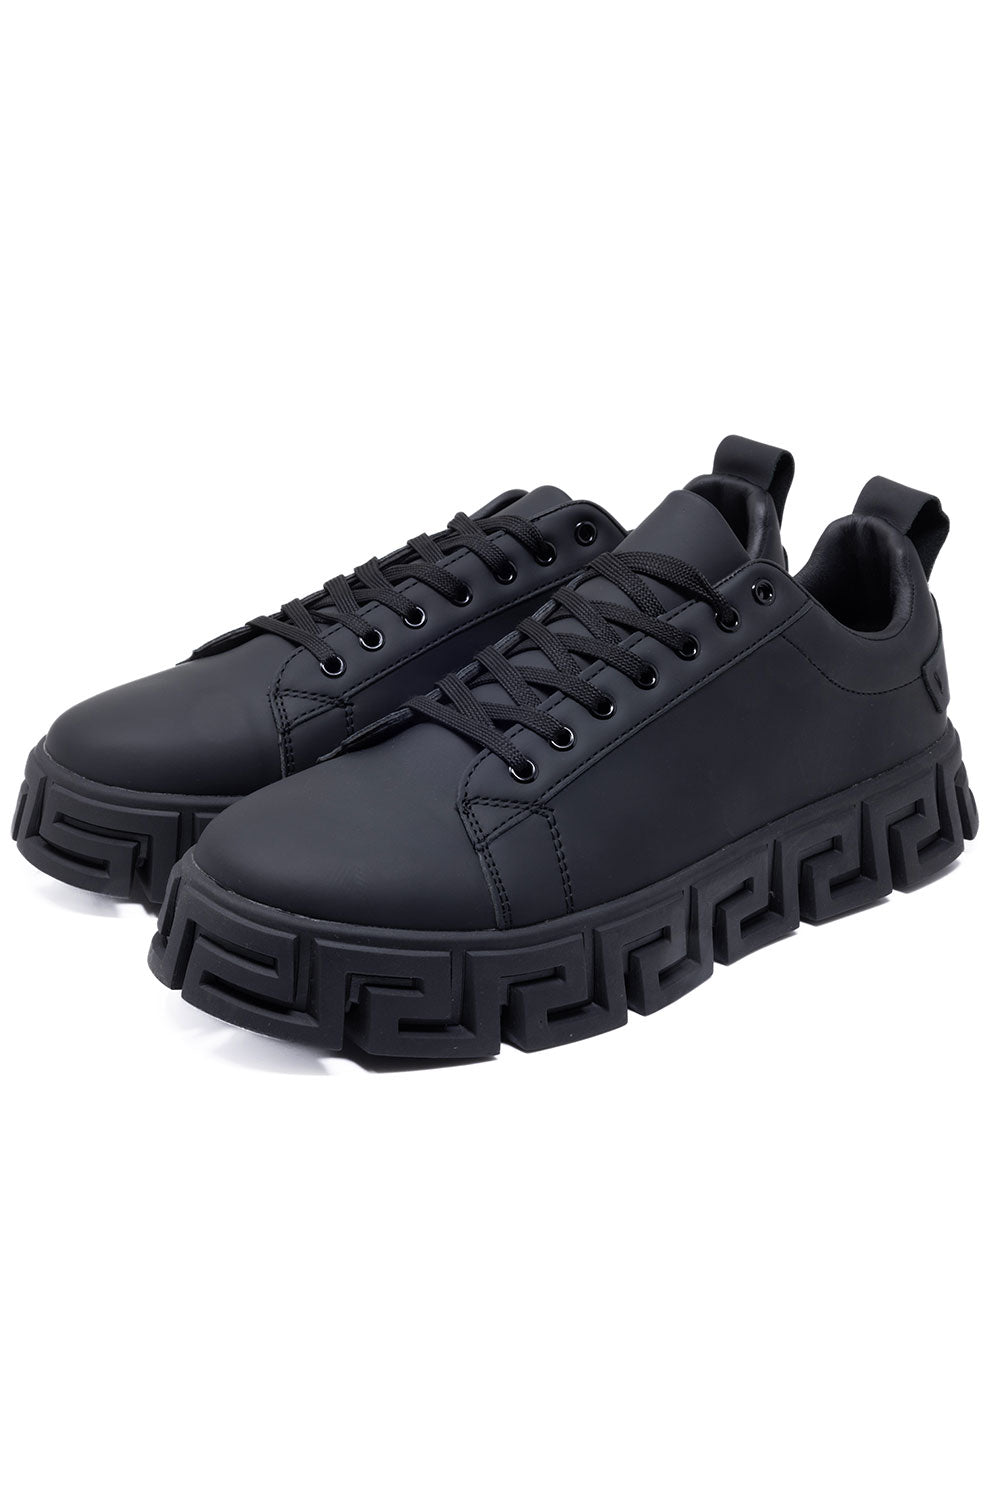 Barabas Men's Premium Greek Key Pattern Sole Sneakers 4SK06 Black